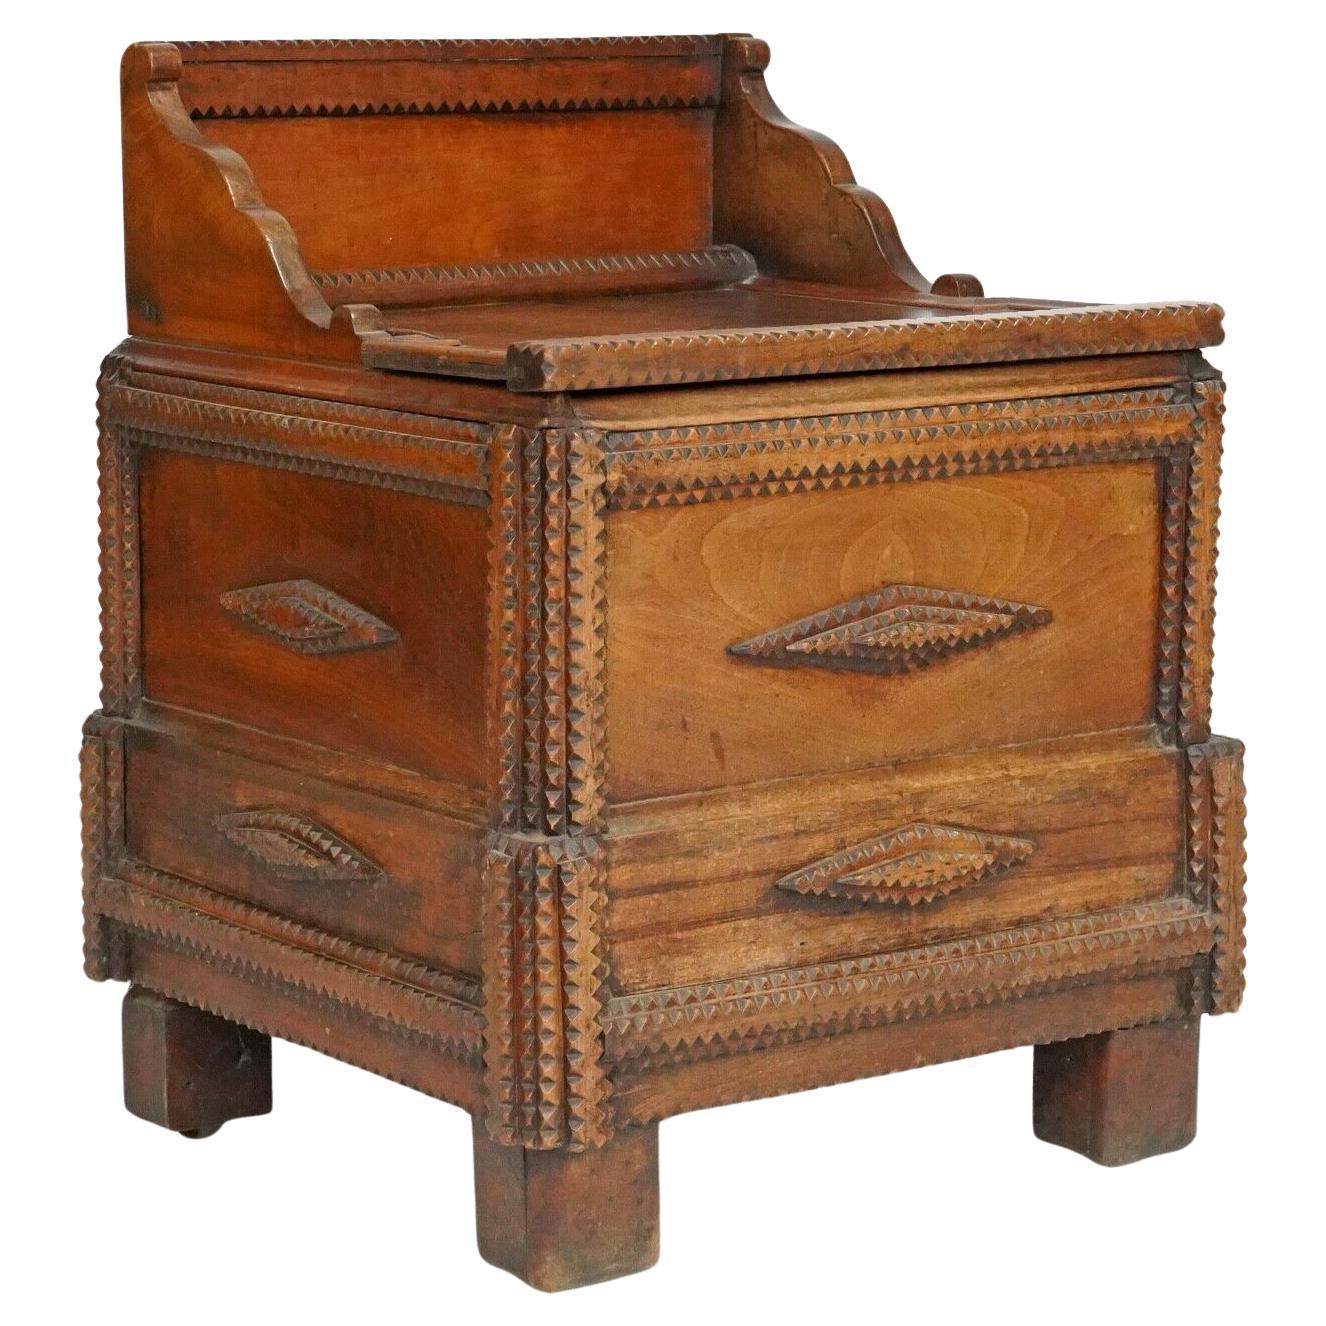 Large Wooden Tramp Art Blanket Box, Storage Trunk, Ottoman, Linen Basket For Sale